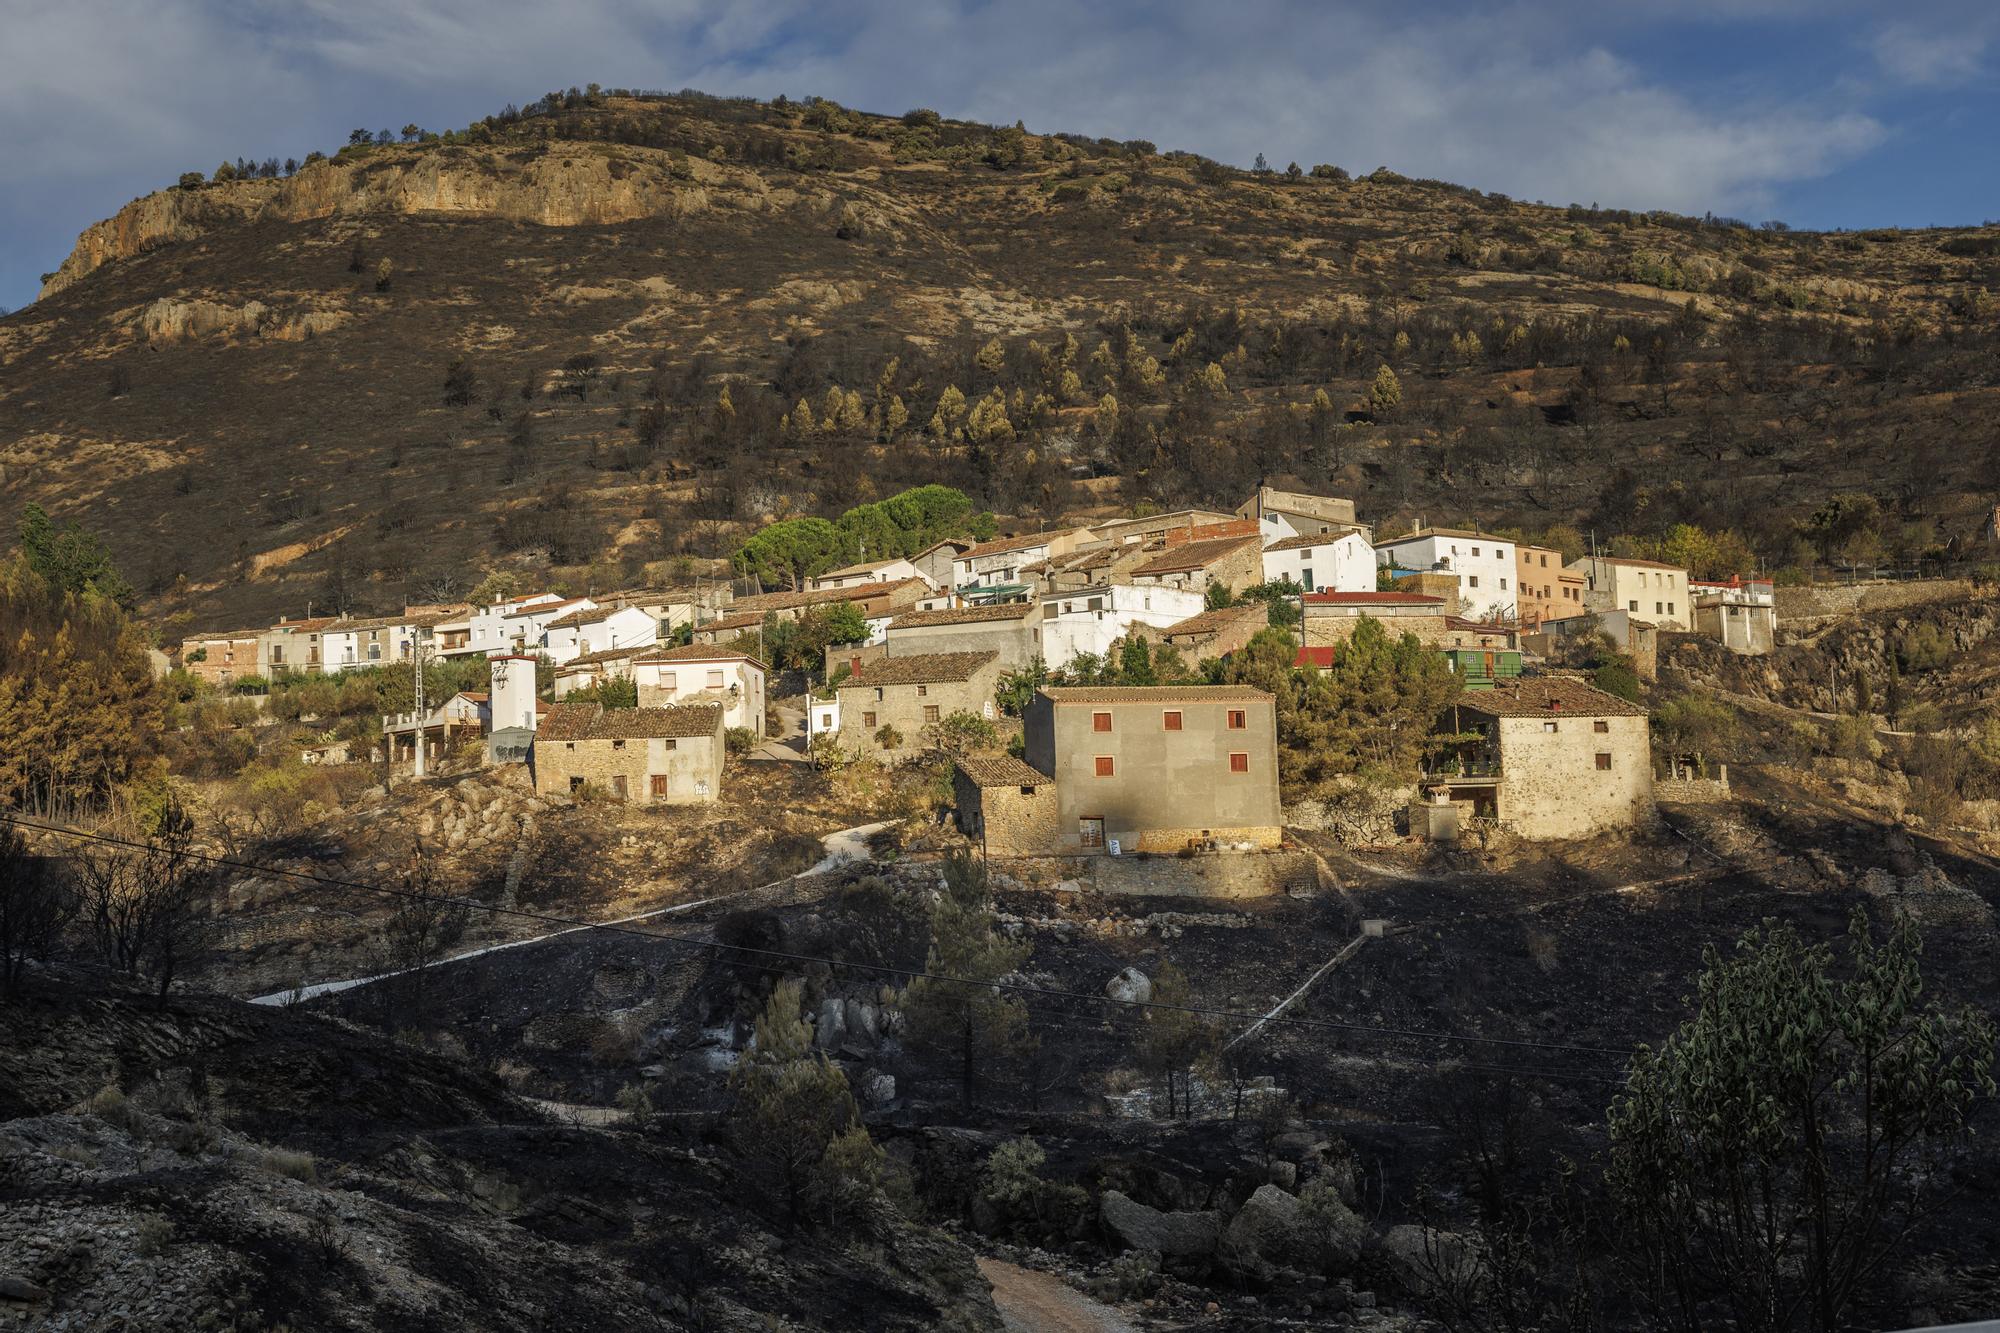 La lluvia reduce la llama del incendio de Bejís hasta casi desaparecer